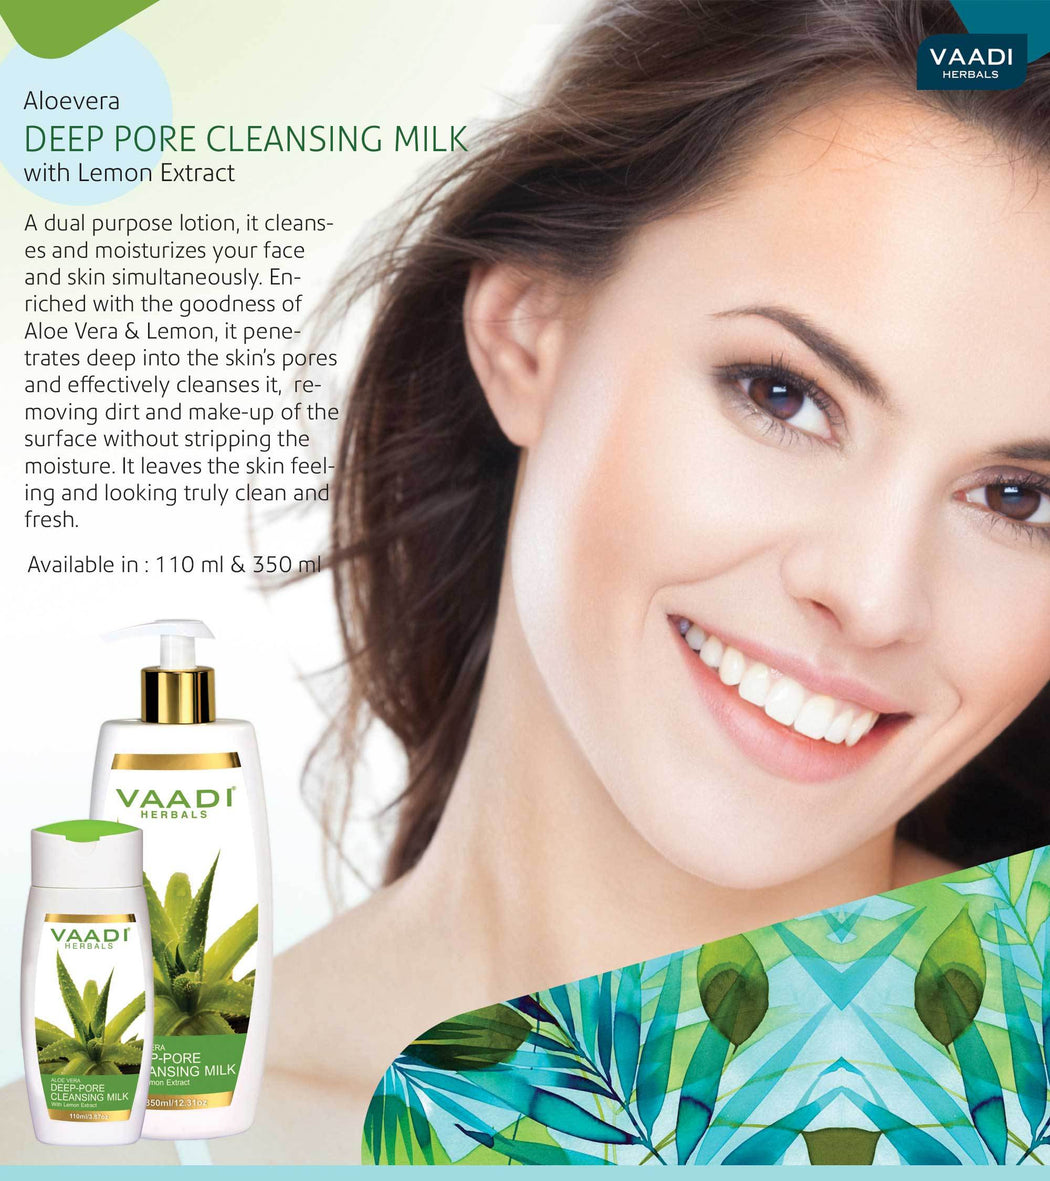 Organic Aloe Vera Deep Pore Cleansing Milk with Lemon Extract - Cleanses & Softens Skin - Locks In Moisture All Day (3 x 110 ml/ 4 fl oz)